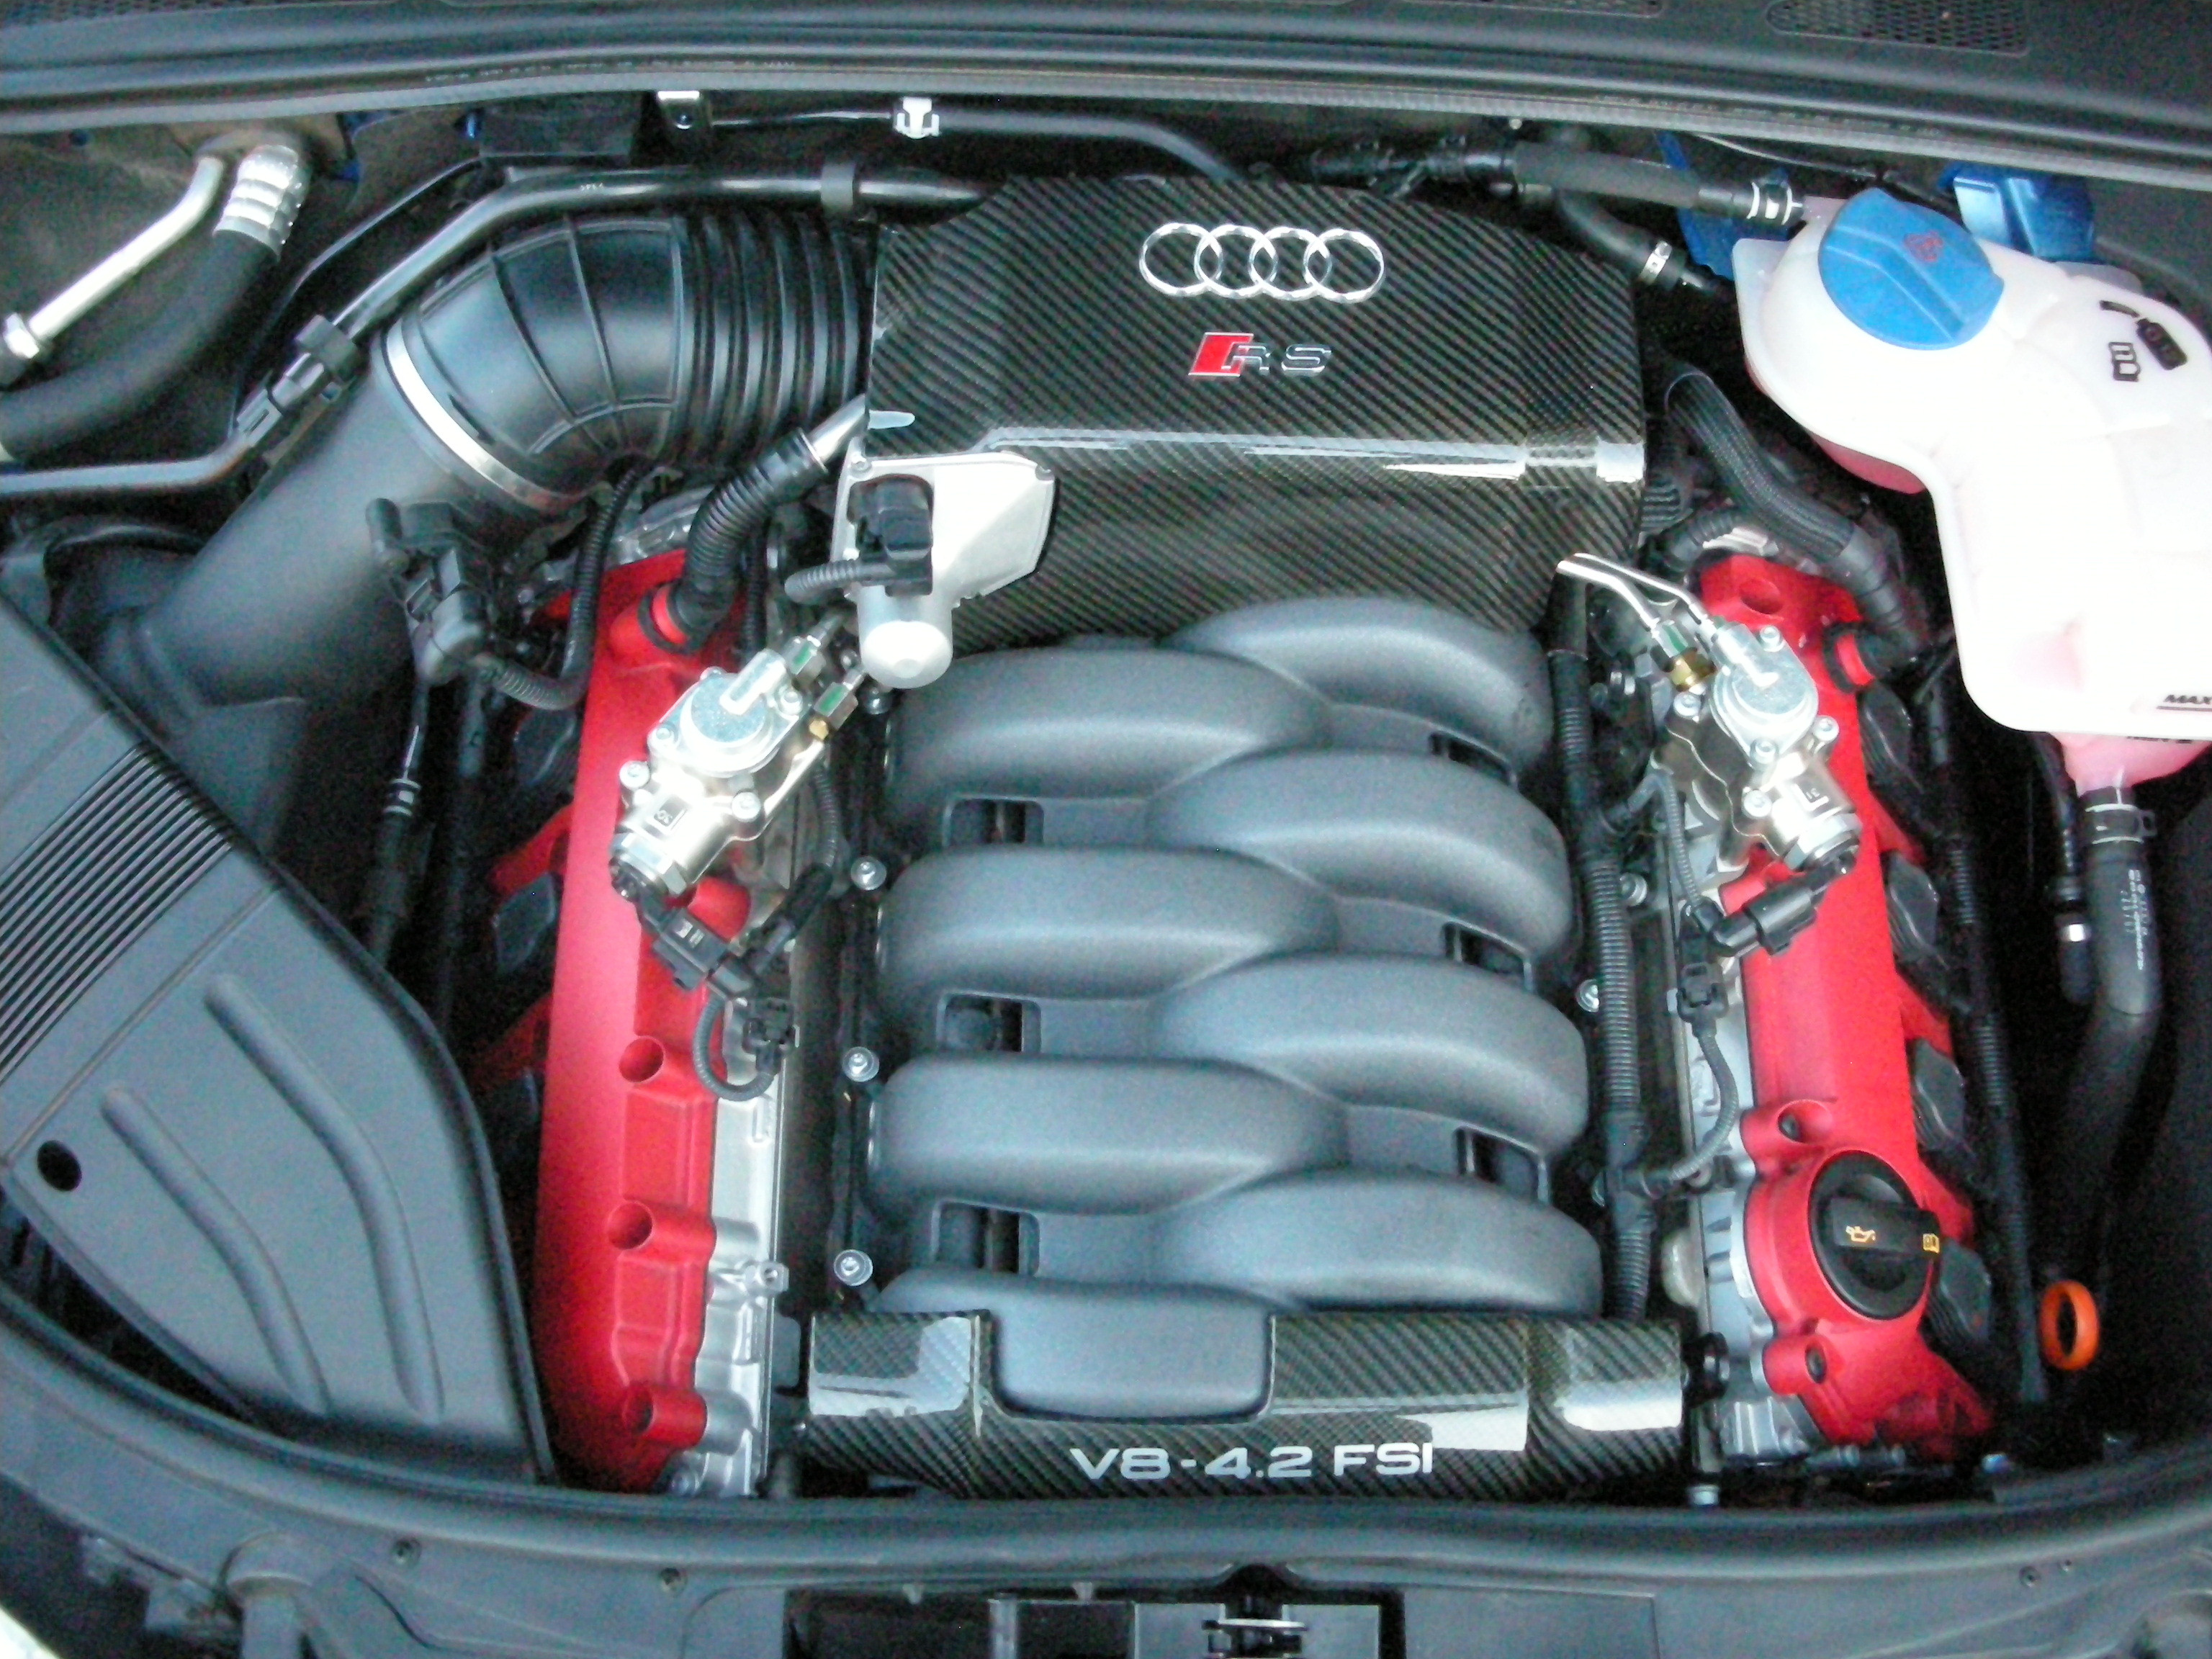 AUDI RS4 engine